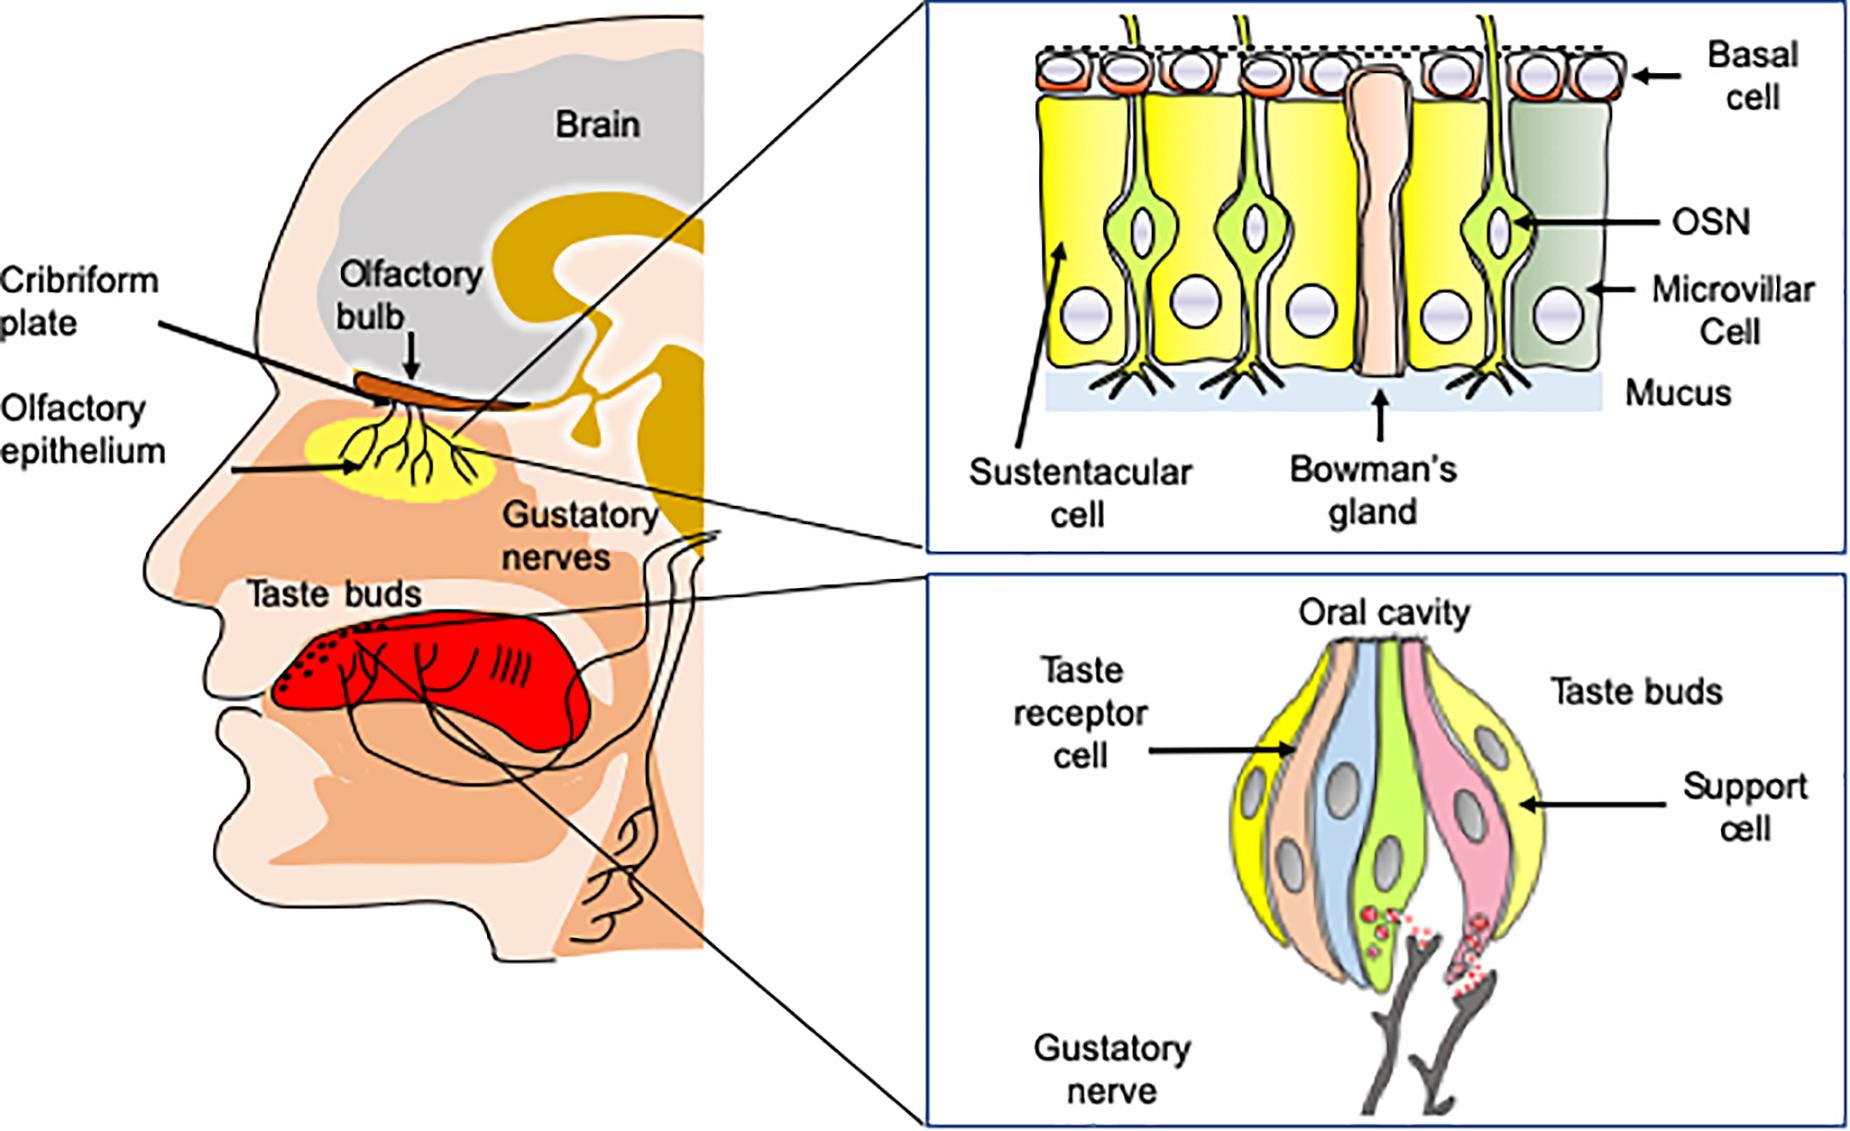 mature olfactory sensory neuron dendrite number